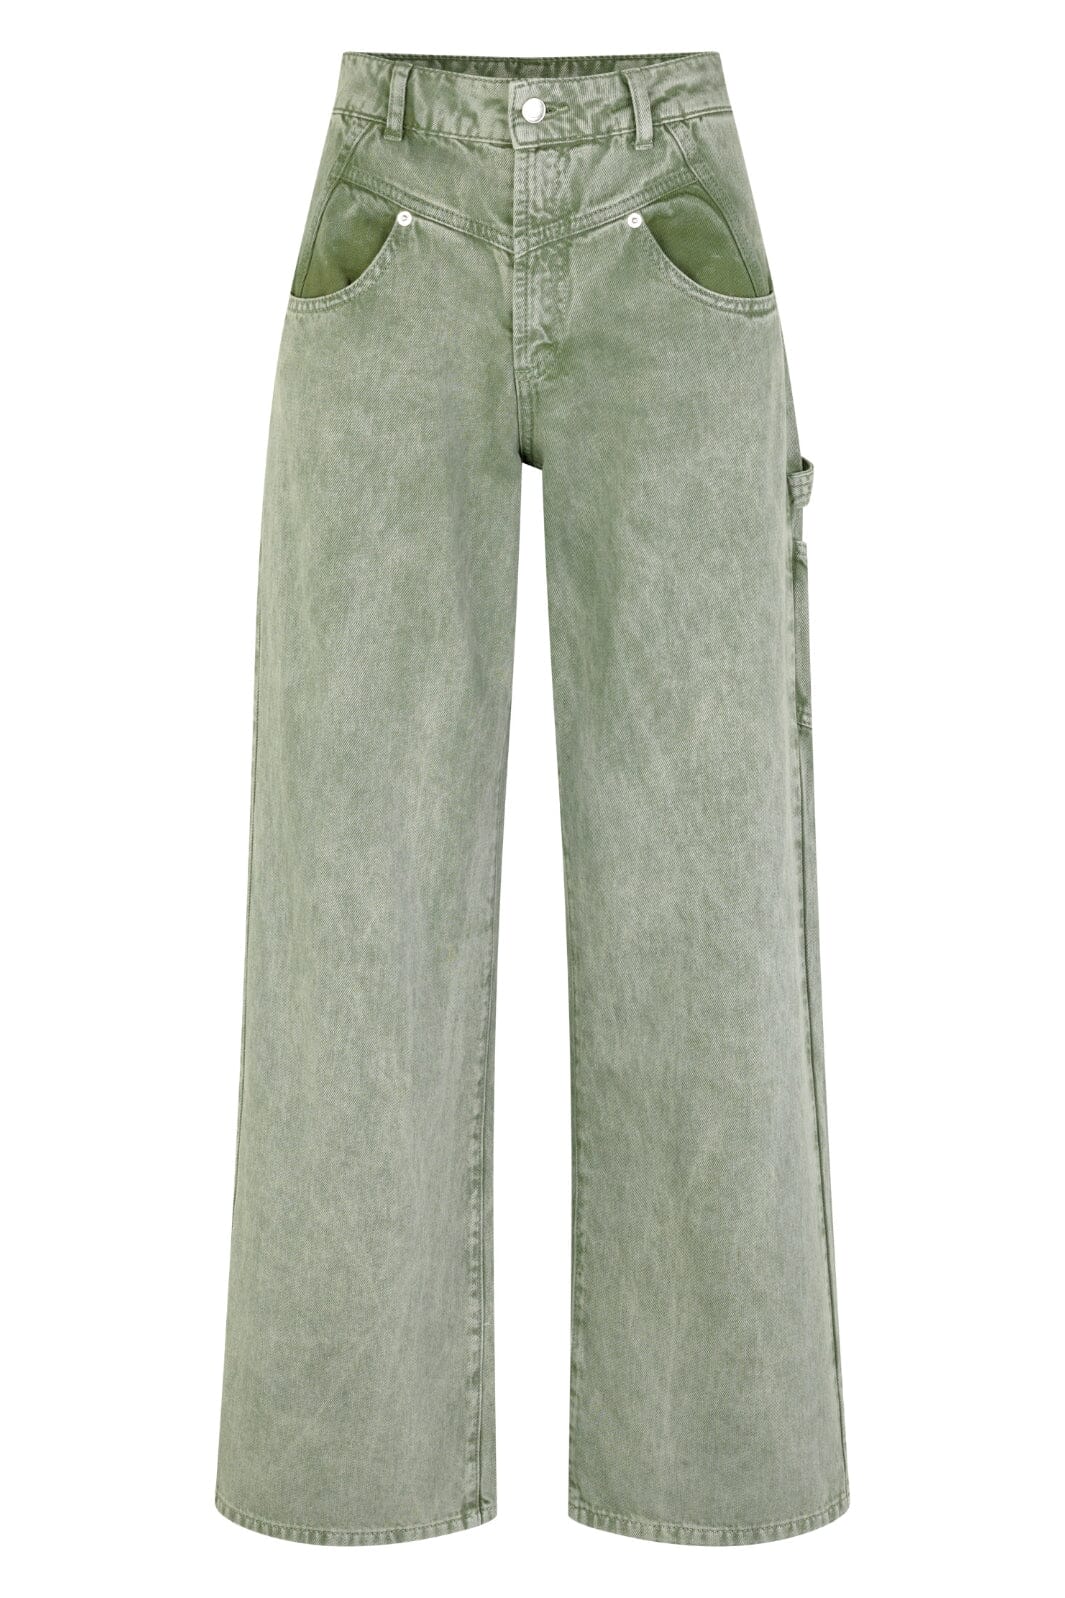 Mbym - Purora-M - P37 Iguana Green Wash Jeans 